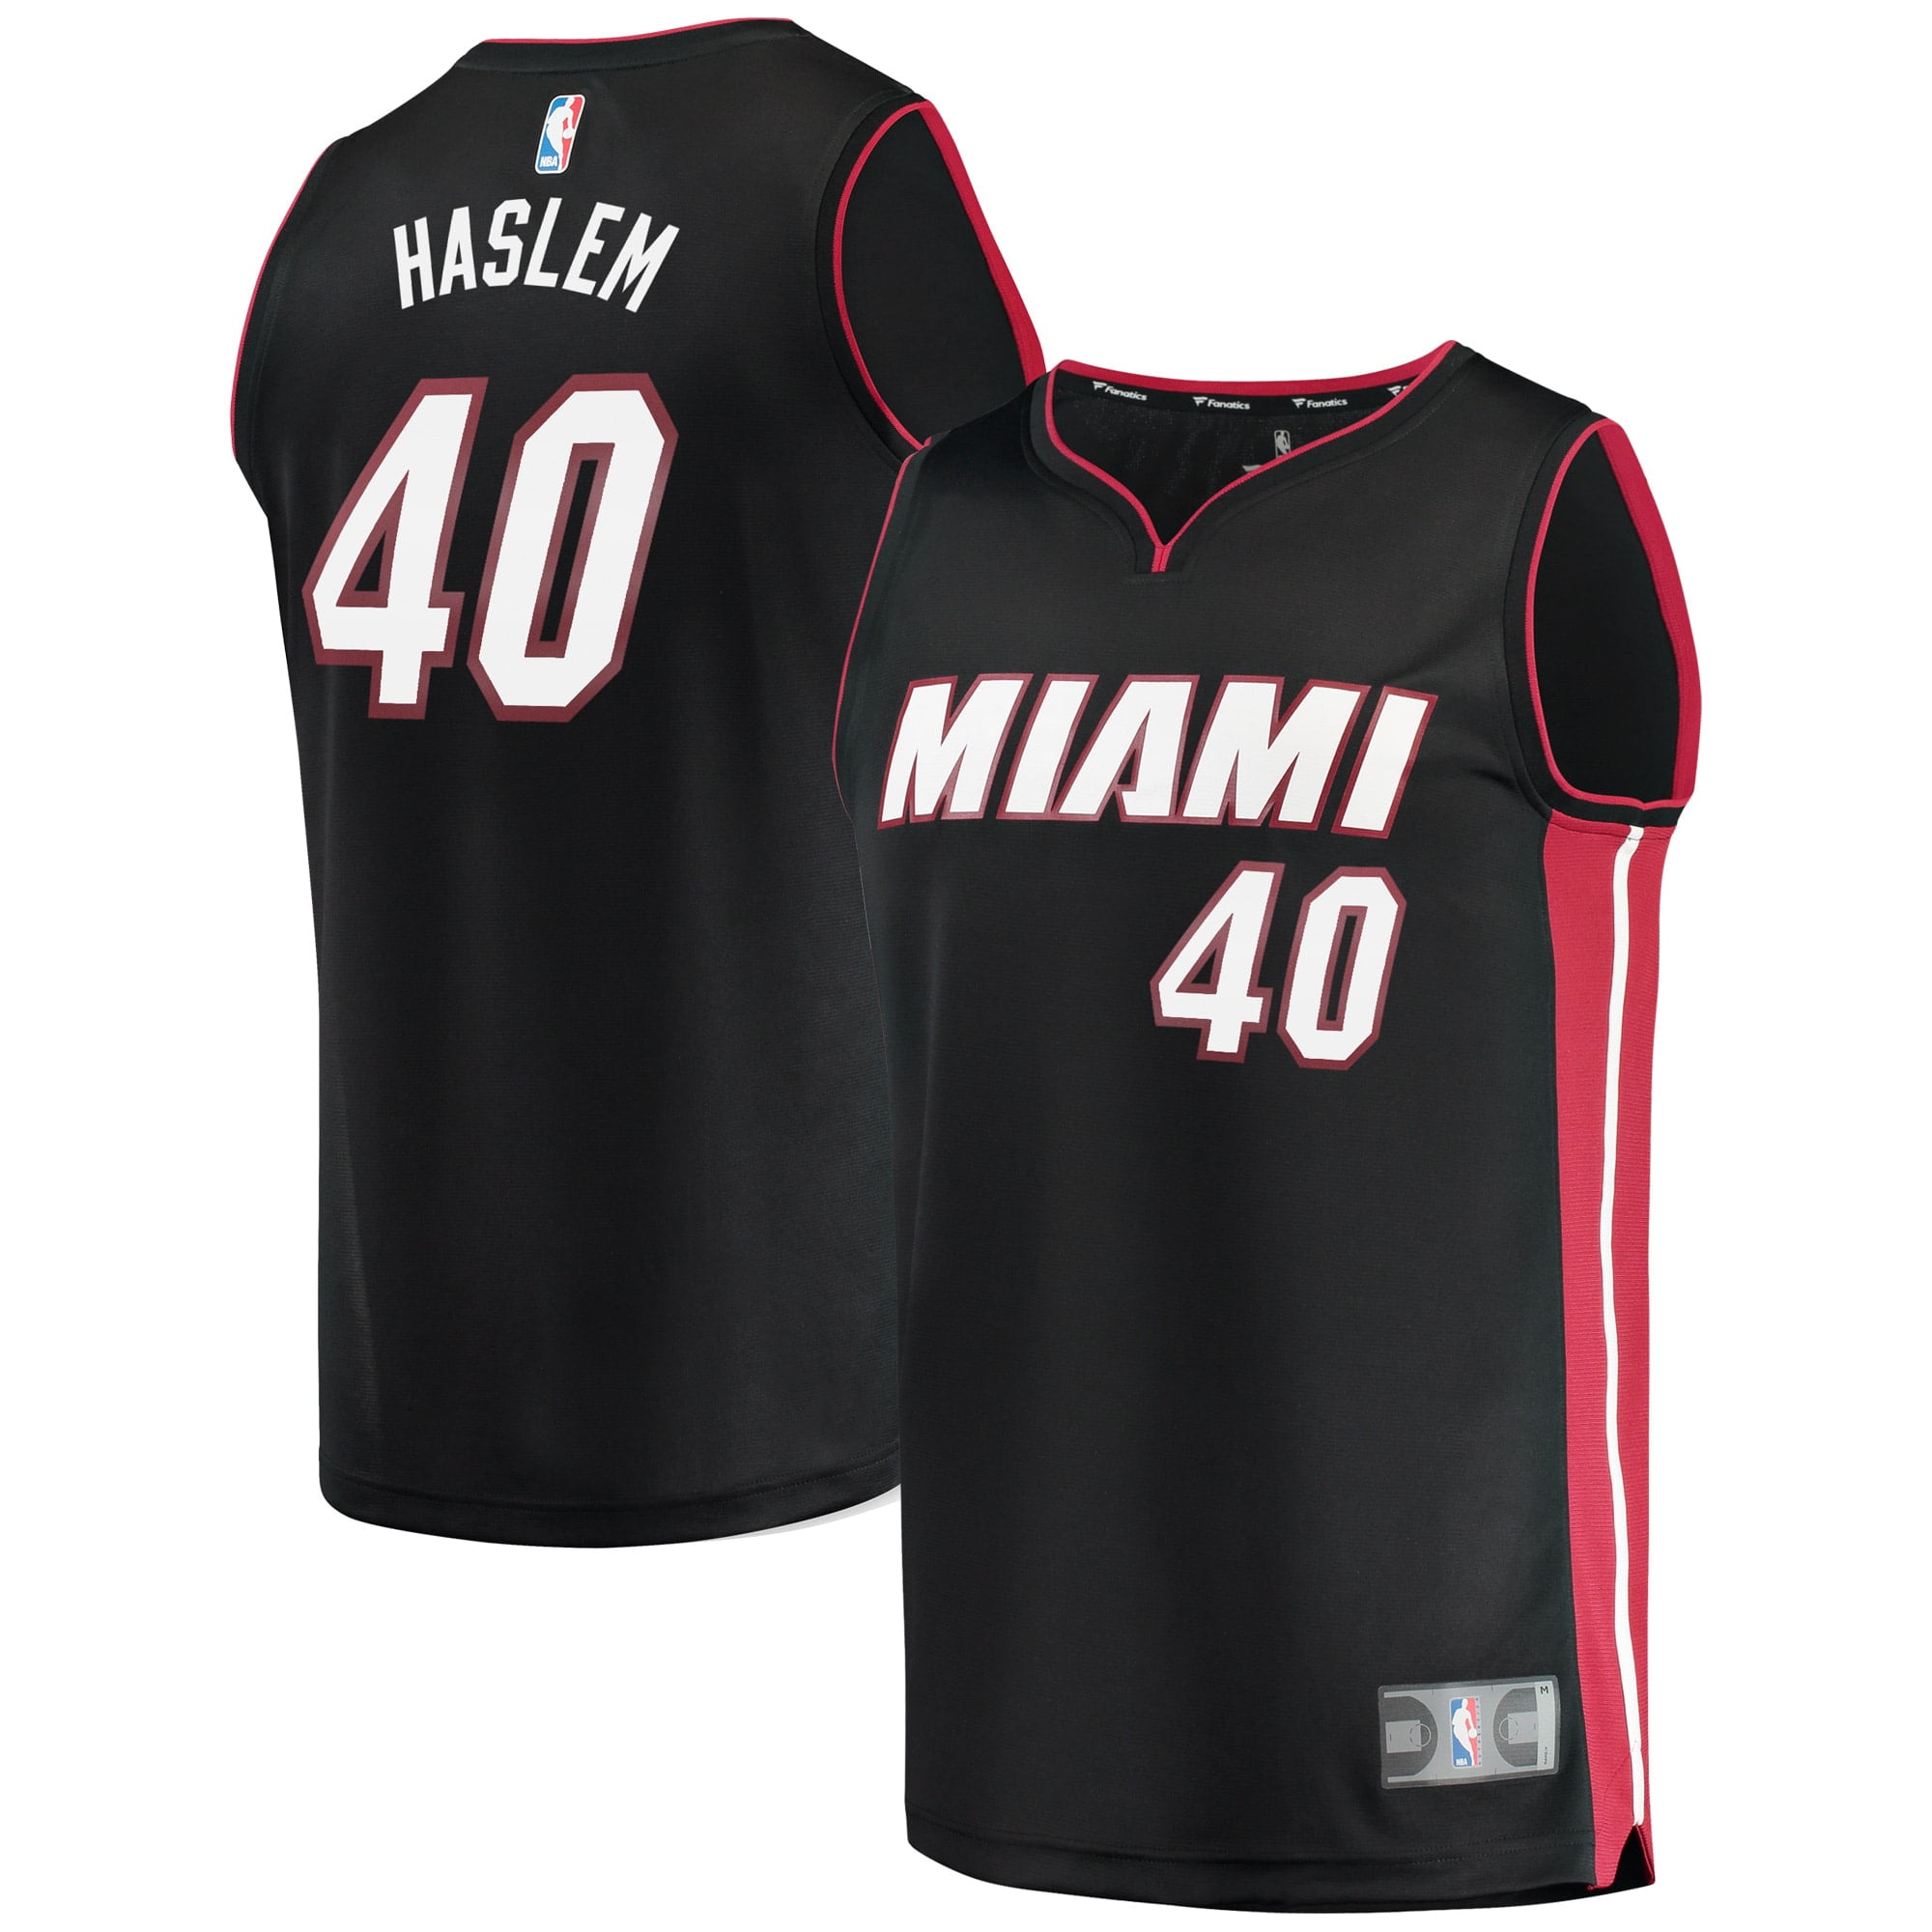 Neu Miami Heat Basketball Shorts Herren Stitched Trikots Hose Sports 